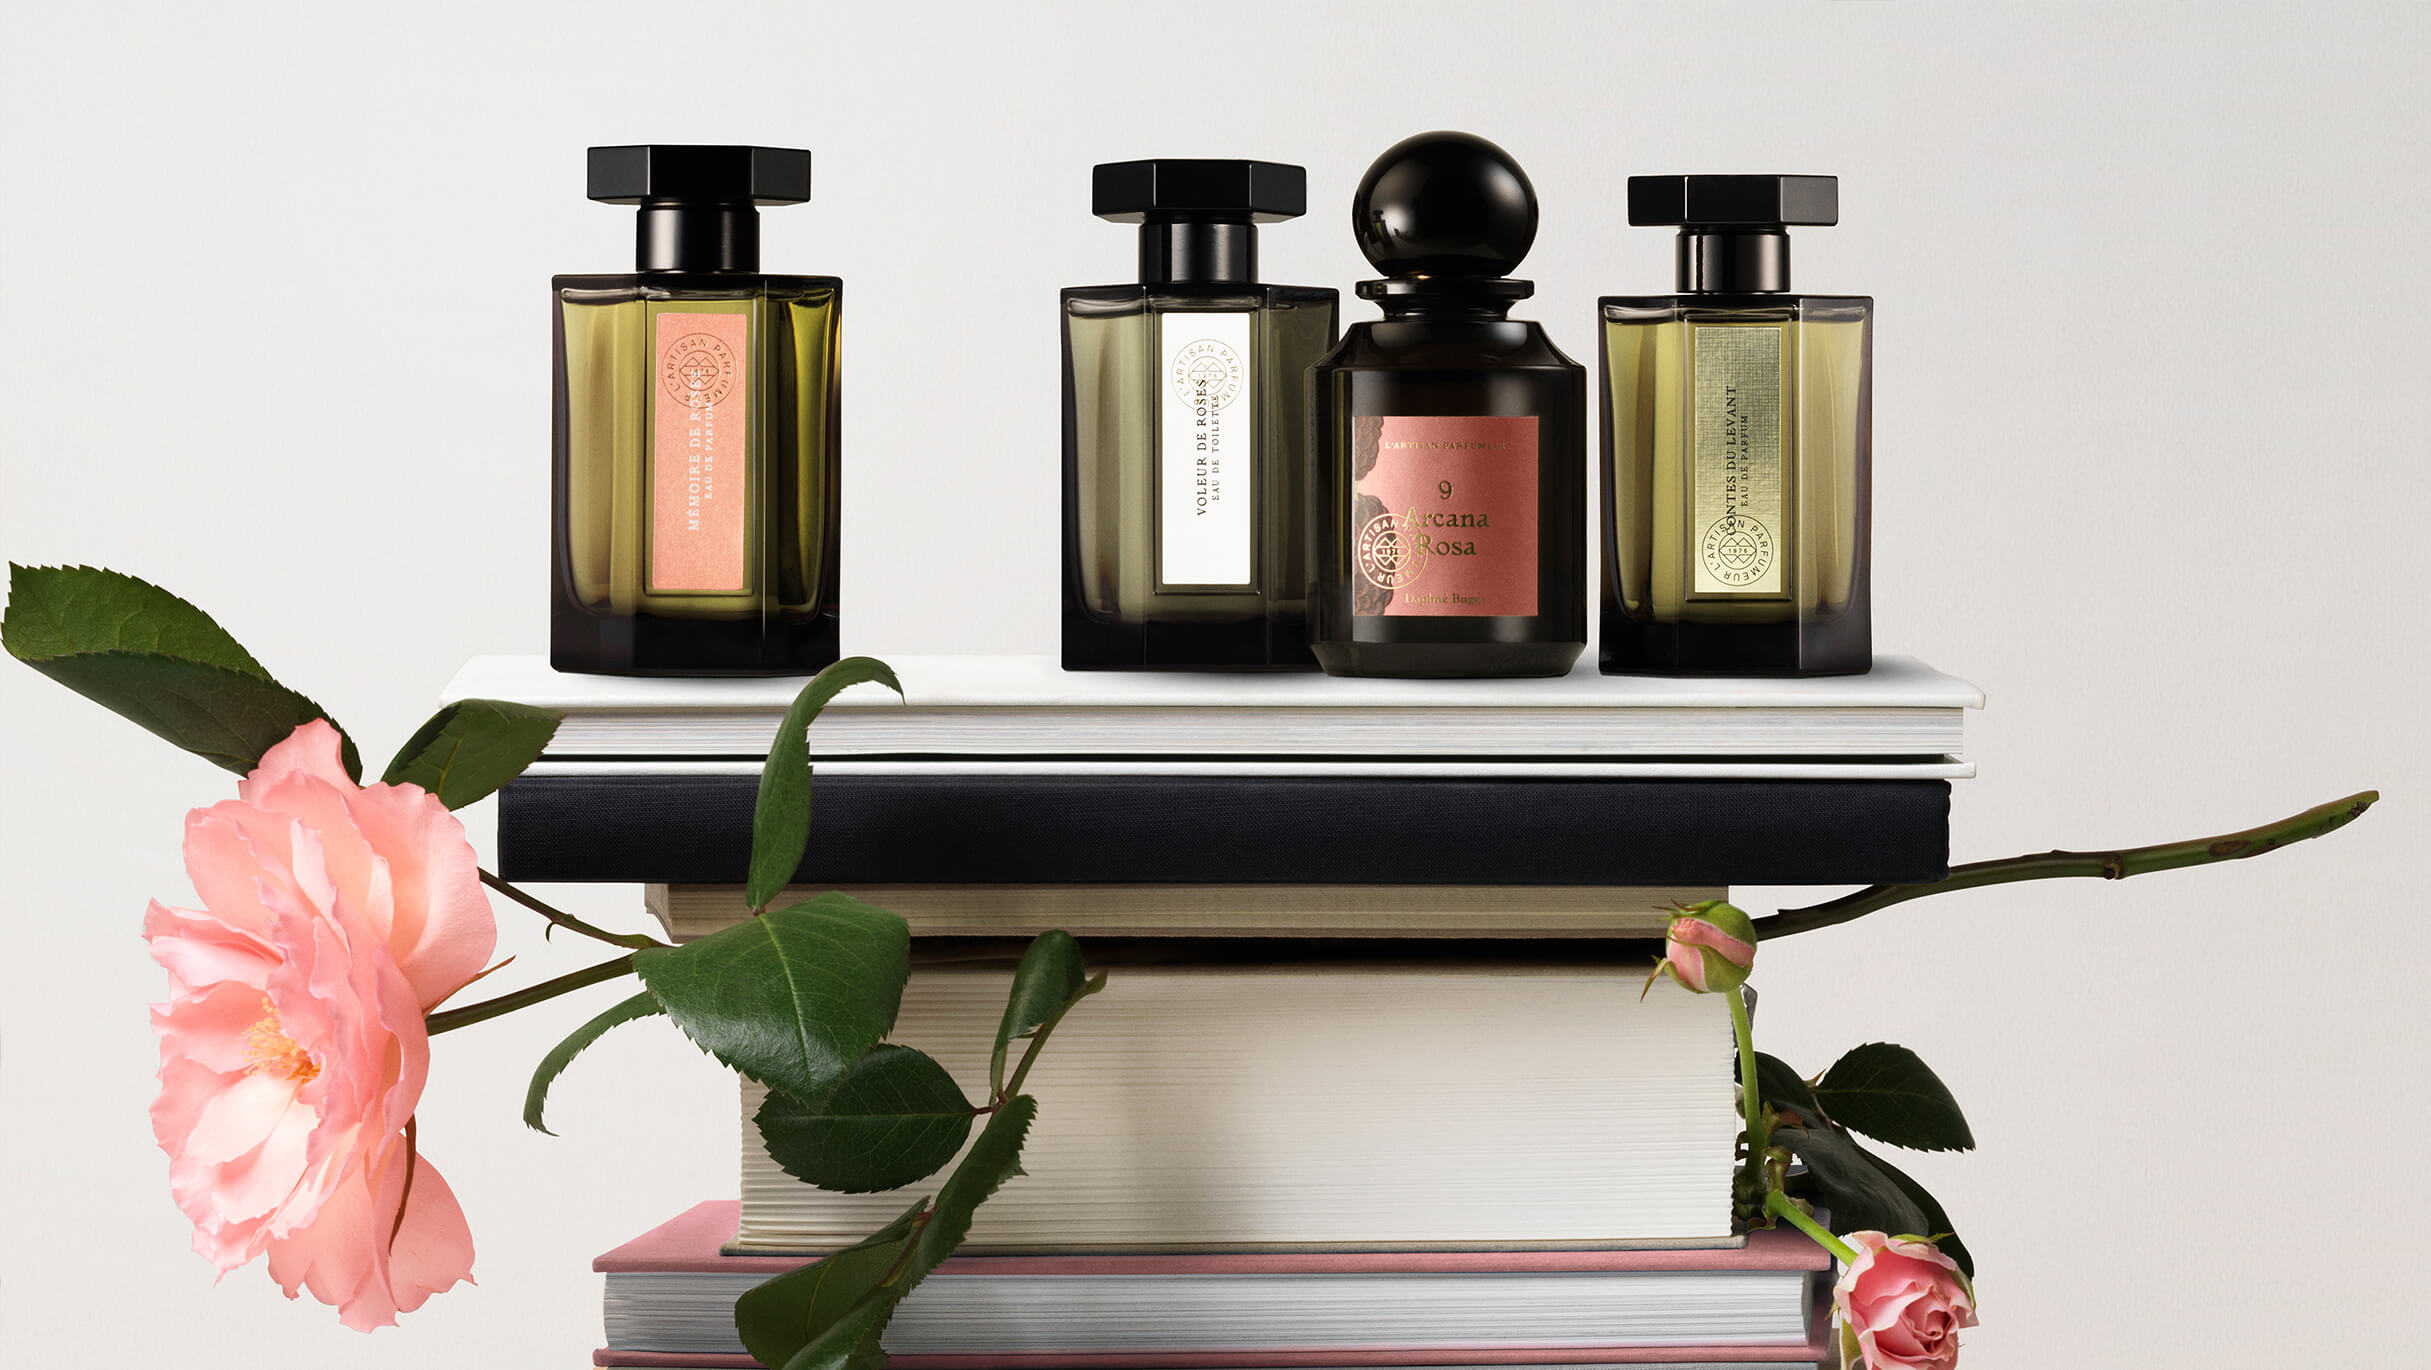 The roses of L'Artisan Parfumeur